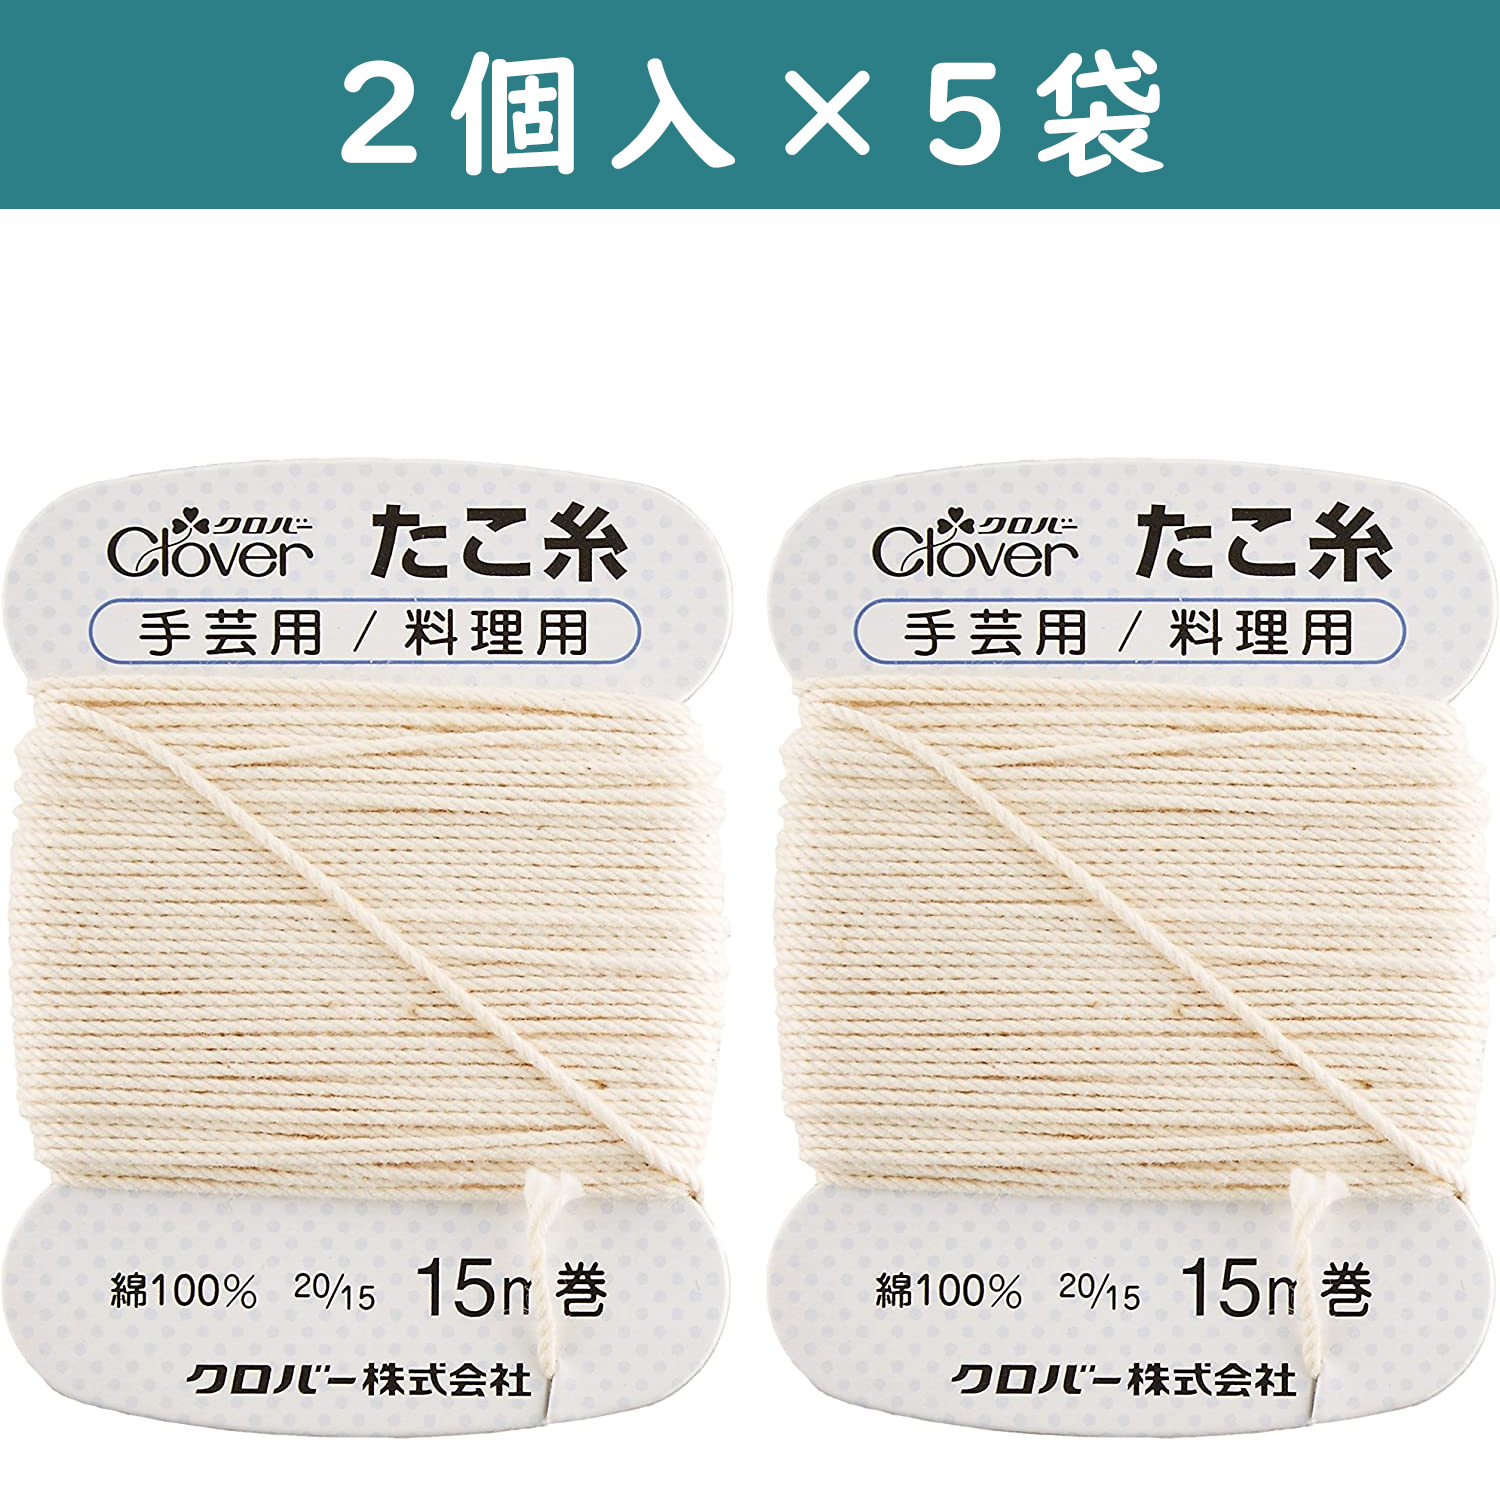 ■CL26-579-5set Clover Clover Twine 15g/roll  2pcs/pack 　×5pack　(set)